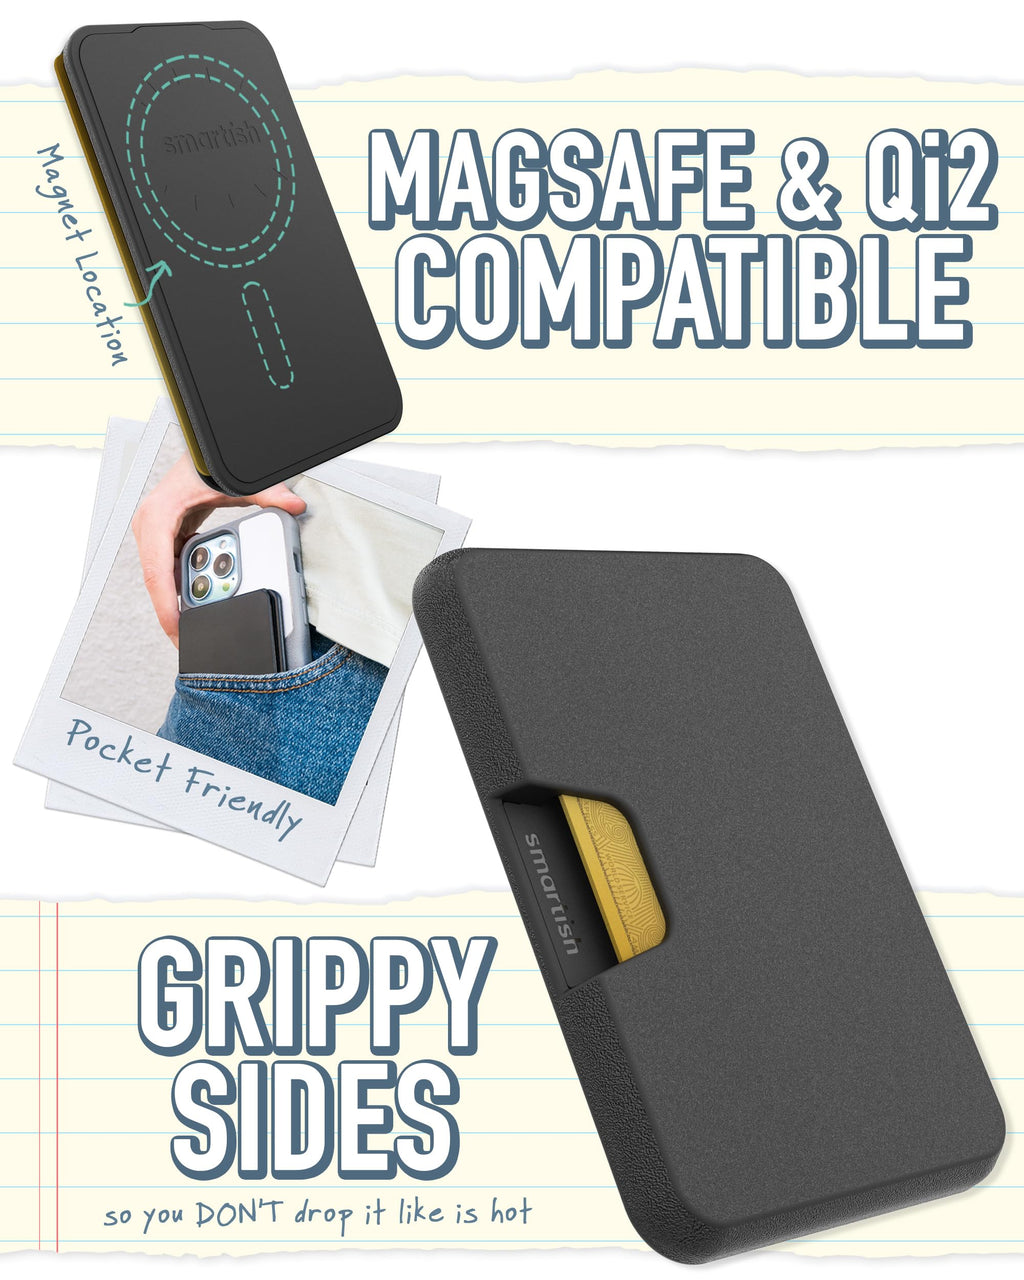 [Australia - AusPower] - Smartish Wallet for MagSafe iPhones - Side Hustle - Slim Detachable Magnetic Card Holder for Apple iPhone 15/14/13/12 Models - Black Tie Affair 